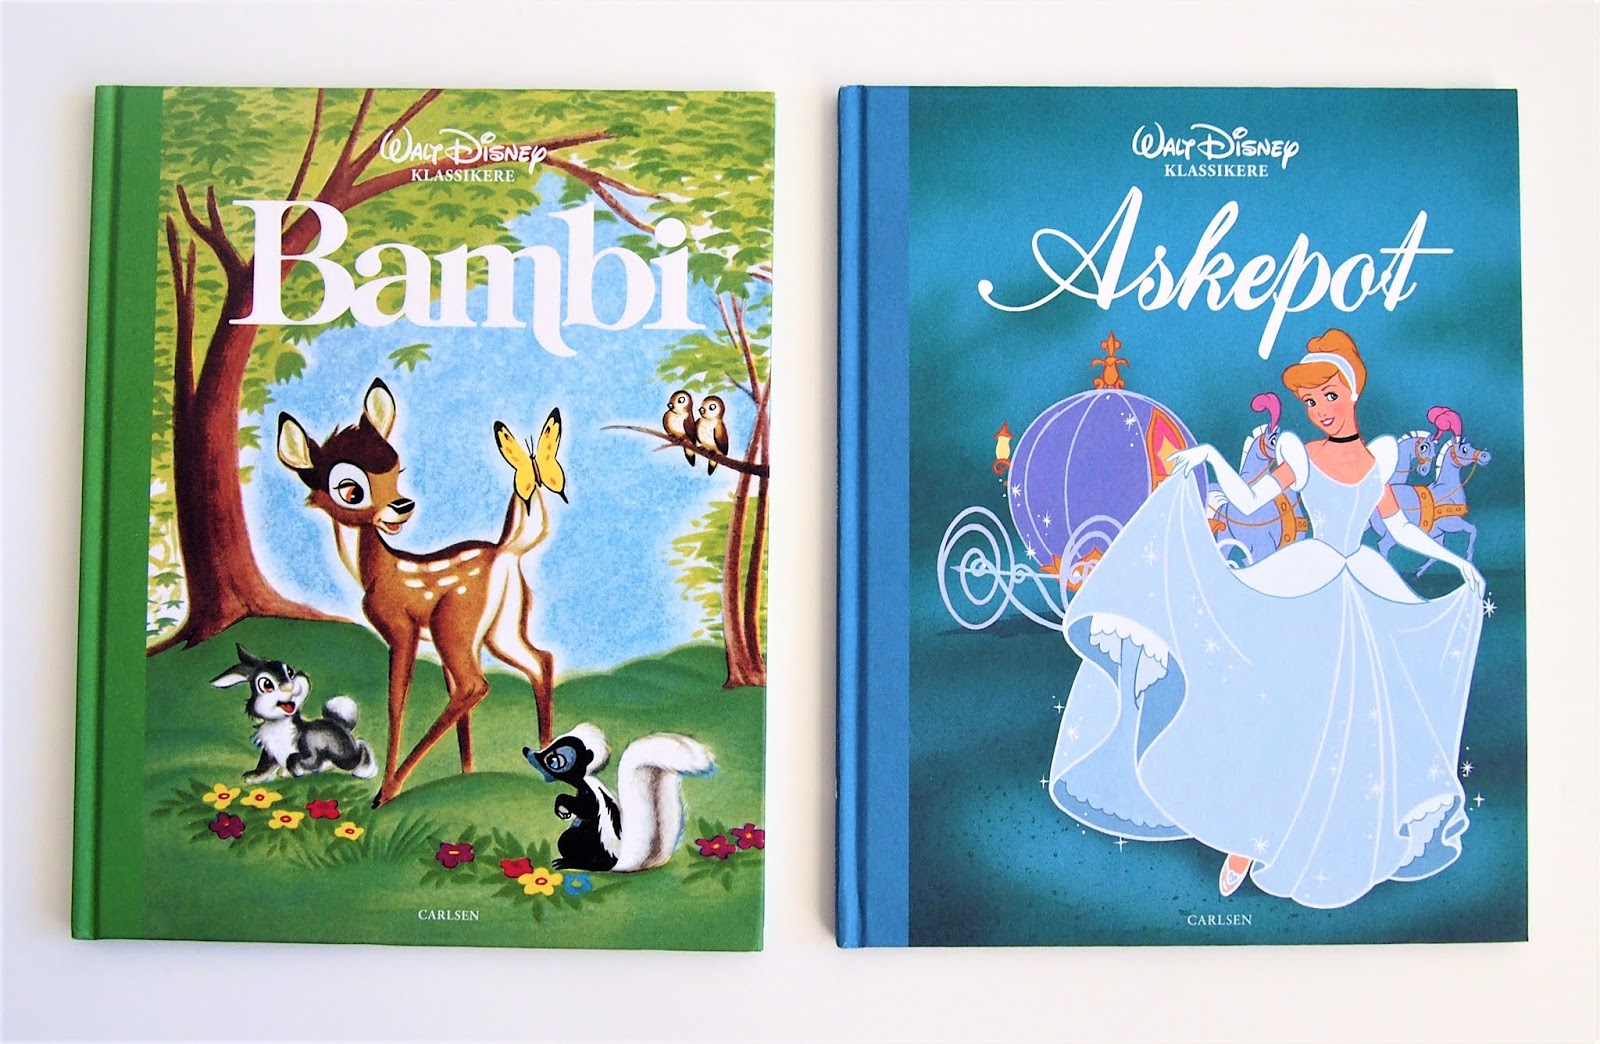 Adventures of a booknerd: "Walt Disney Klassikere BAMBI ASKEPOT" af Walt Disney Studio